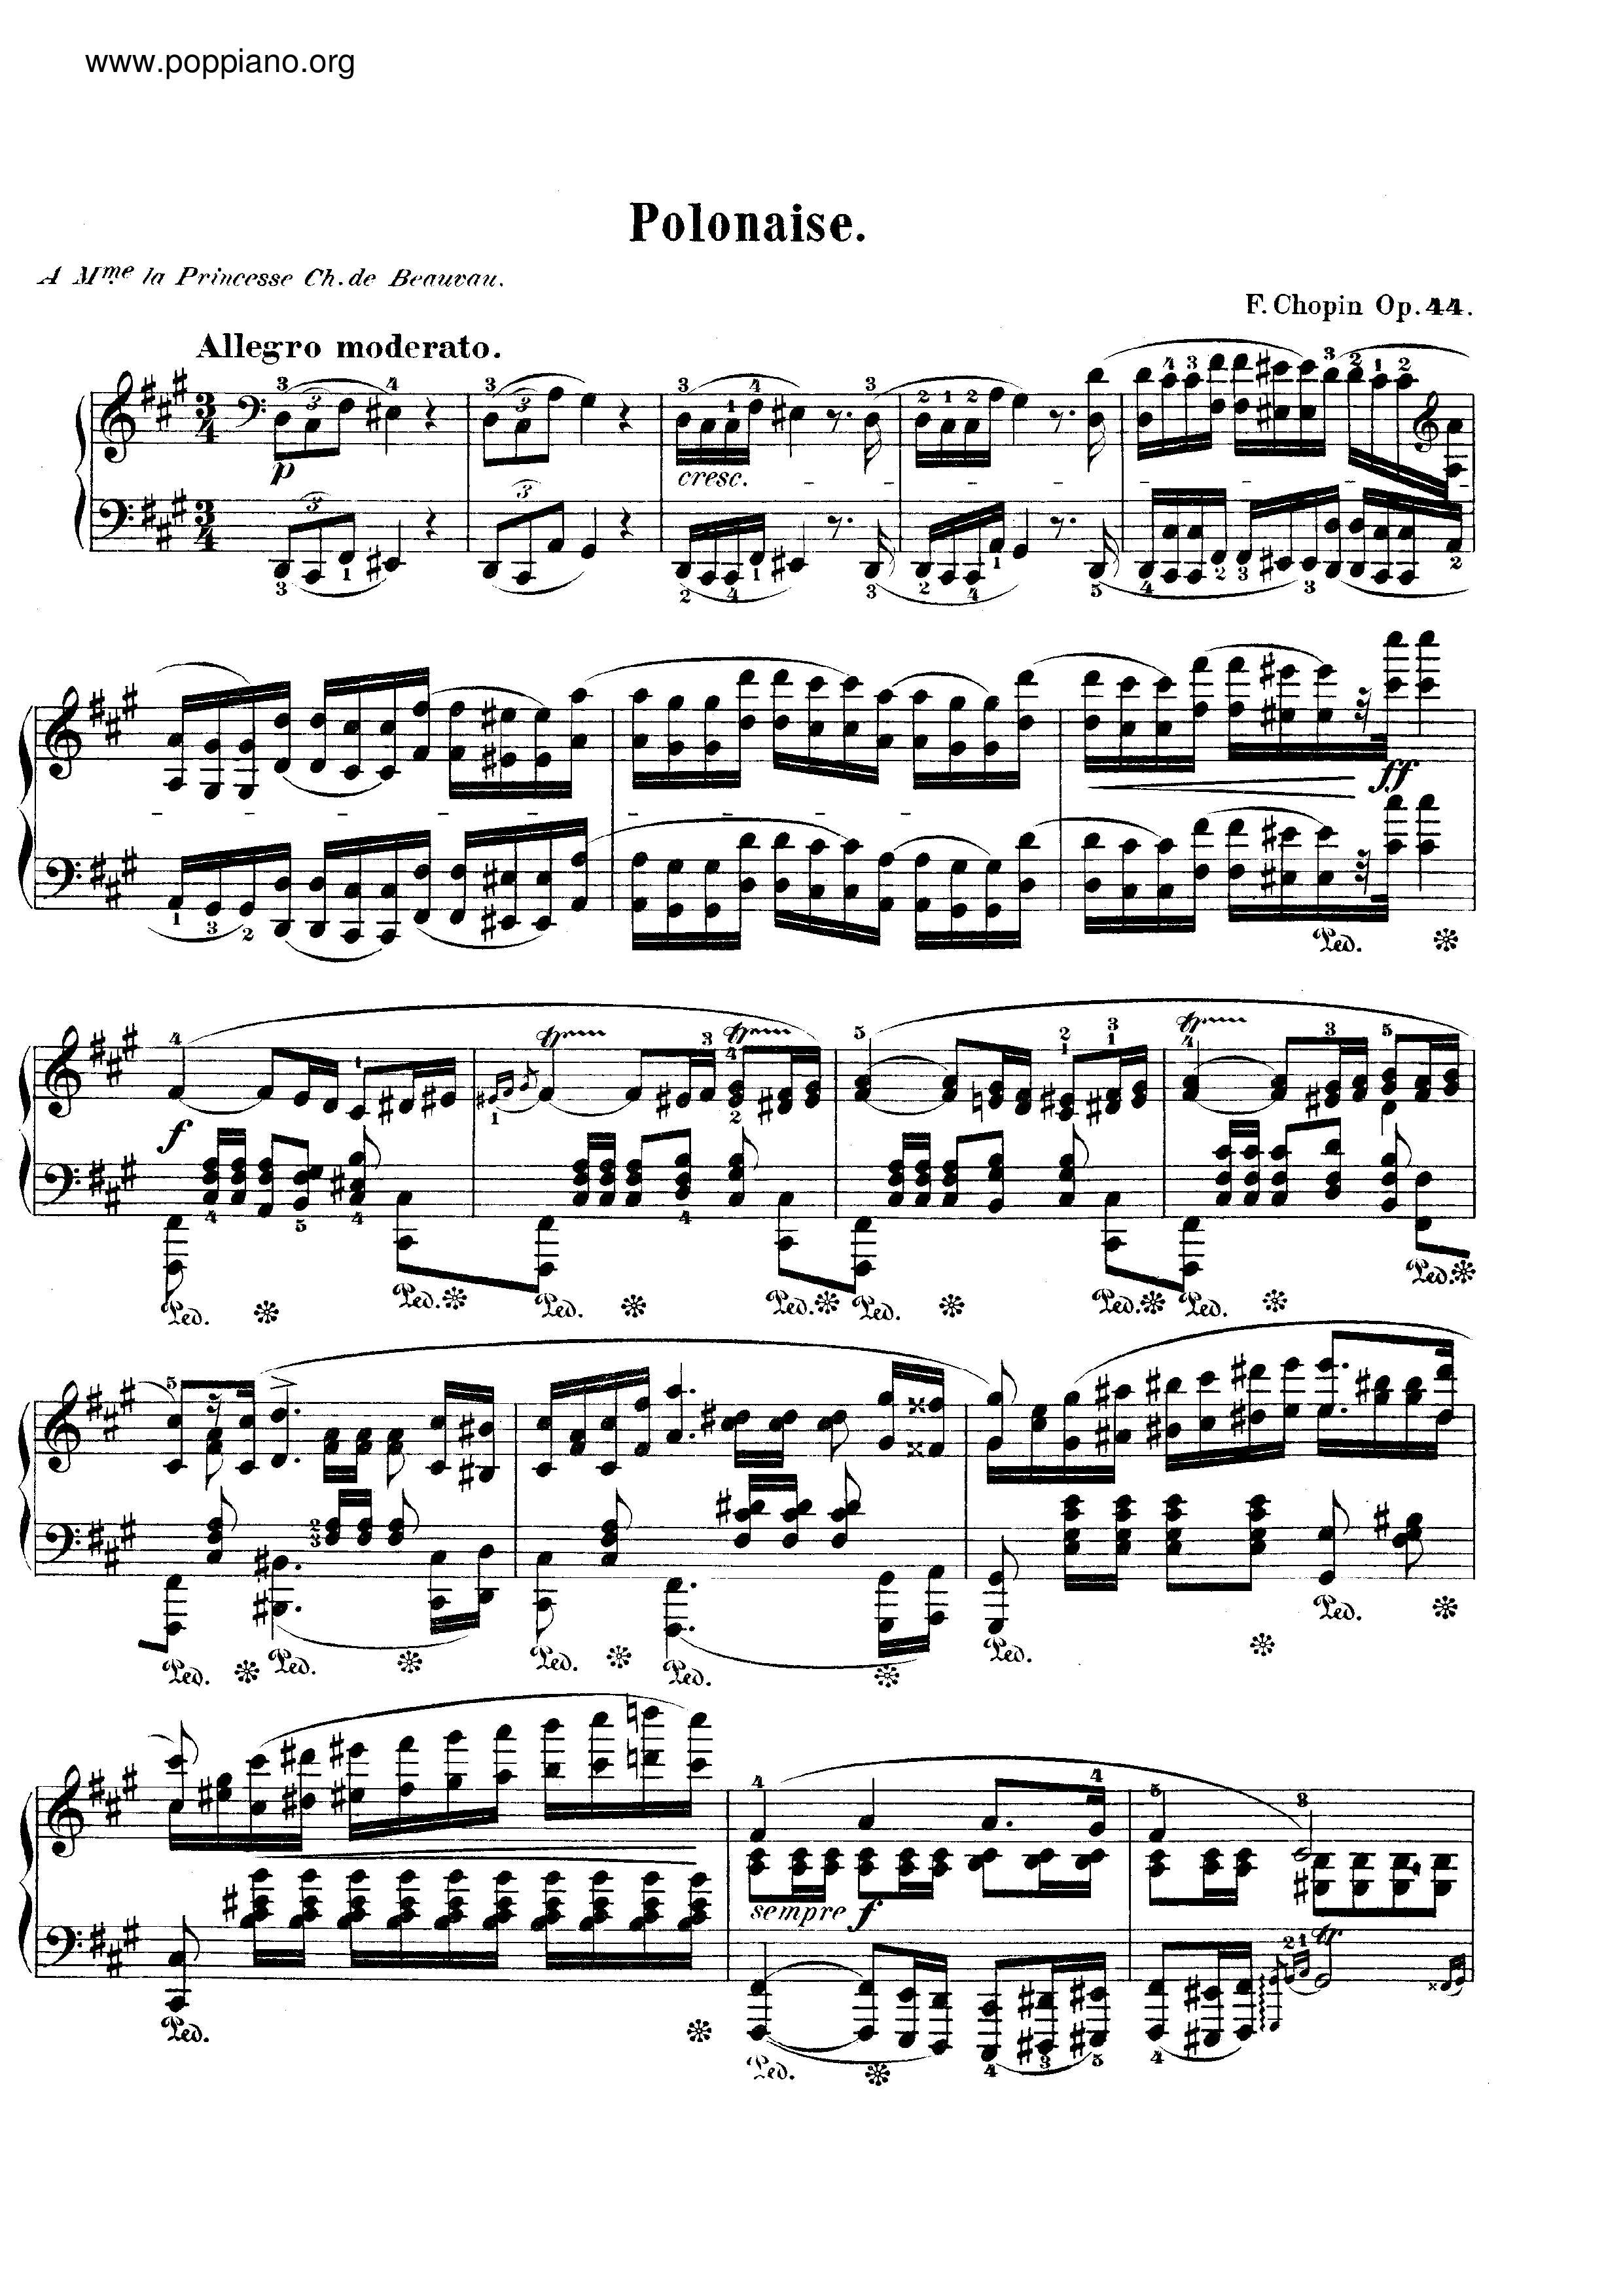 Polonaise in f sharp minor, Op. 44琴譜